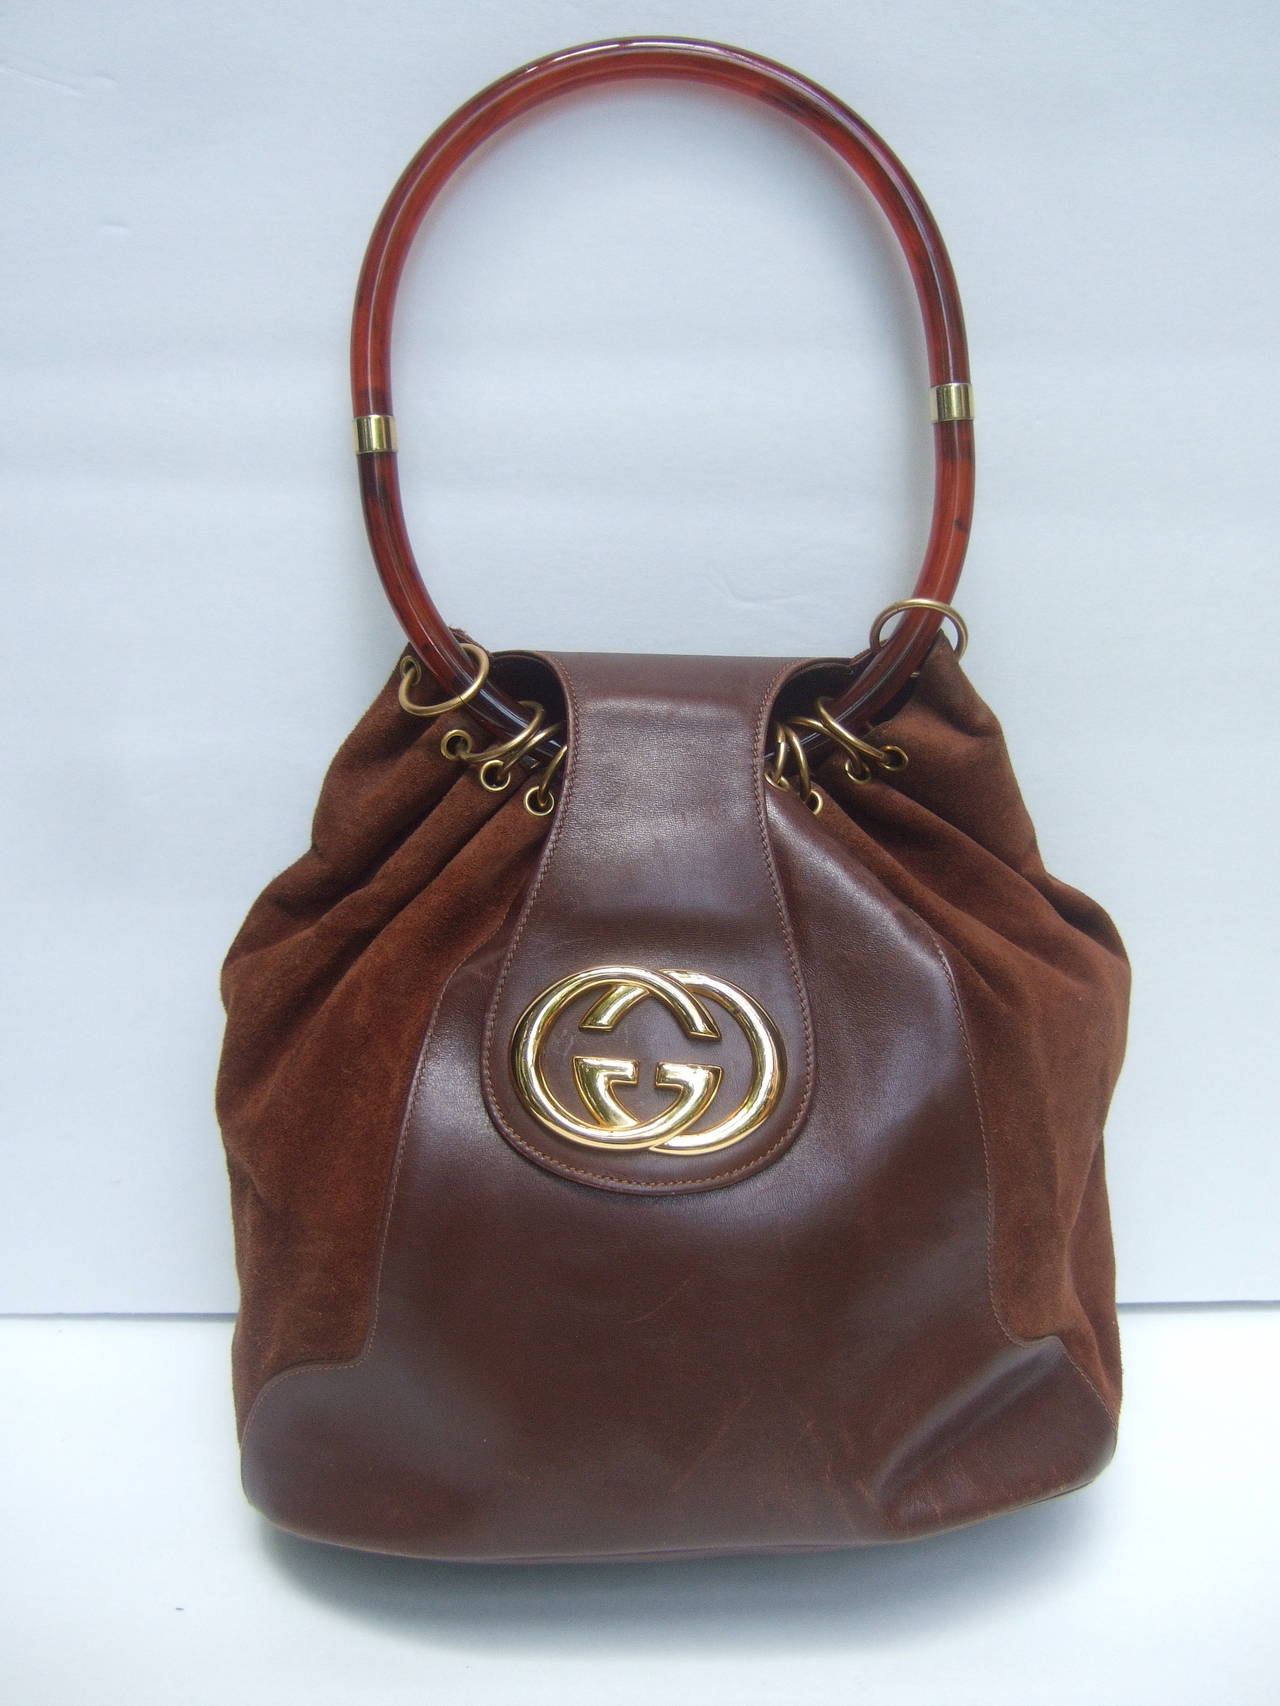 Women's Gucci Italy Rare Brown Leather & Suede Handbag c 1970